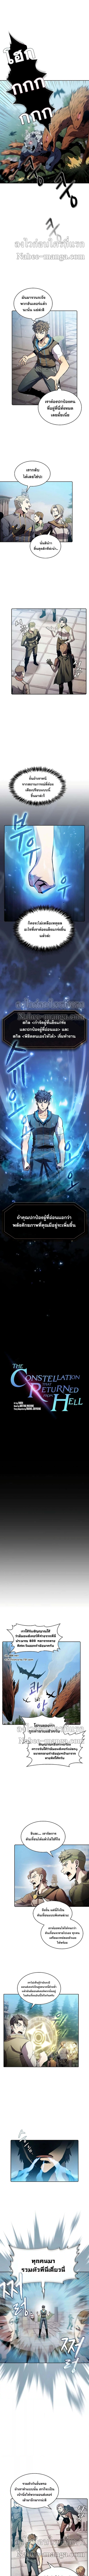 The Constellation 71 01